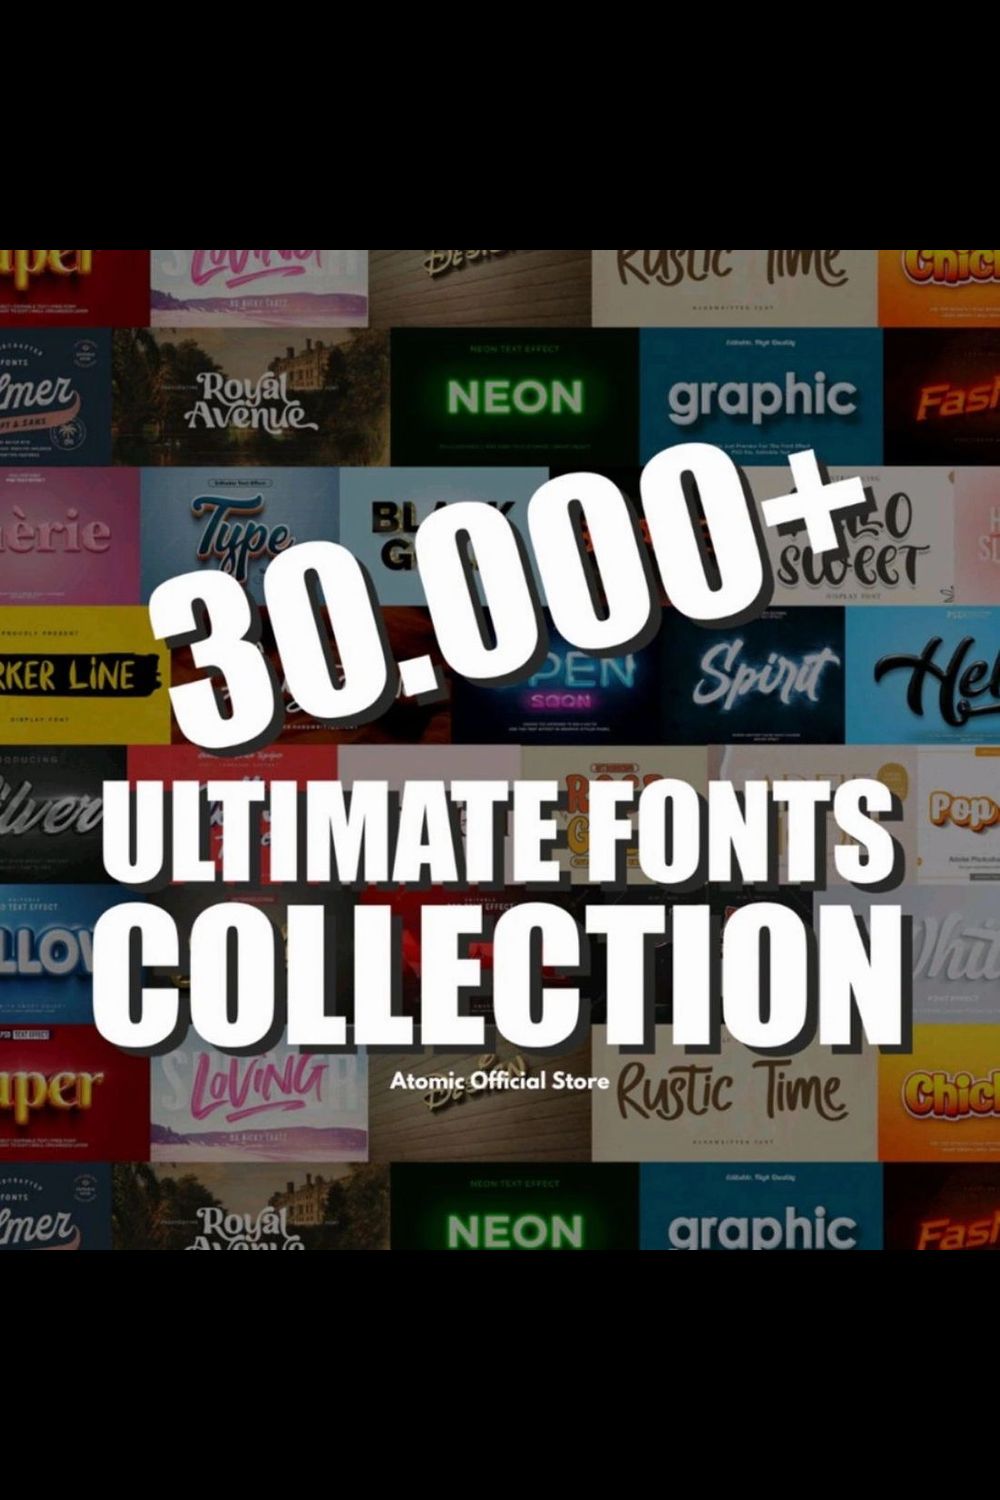 30,000 Ultimate Premium Font Collection Bundle pinterest preview image.